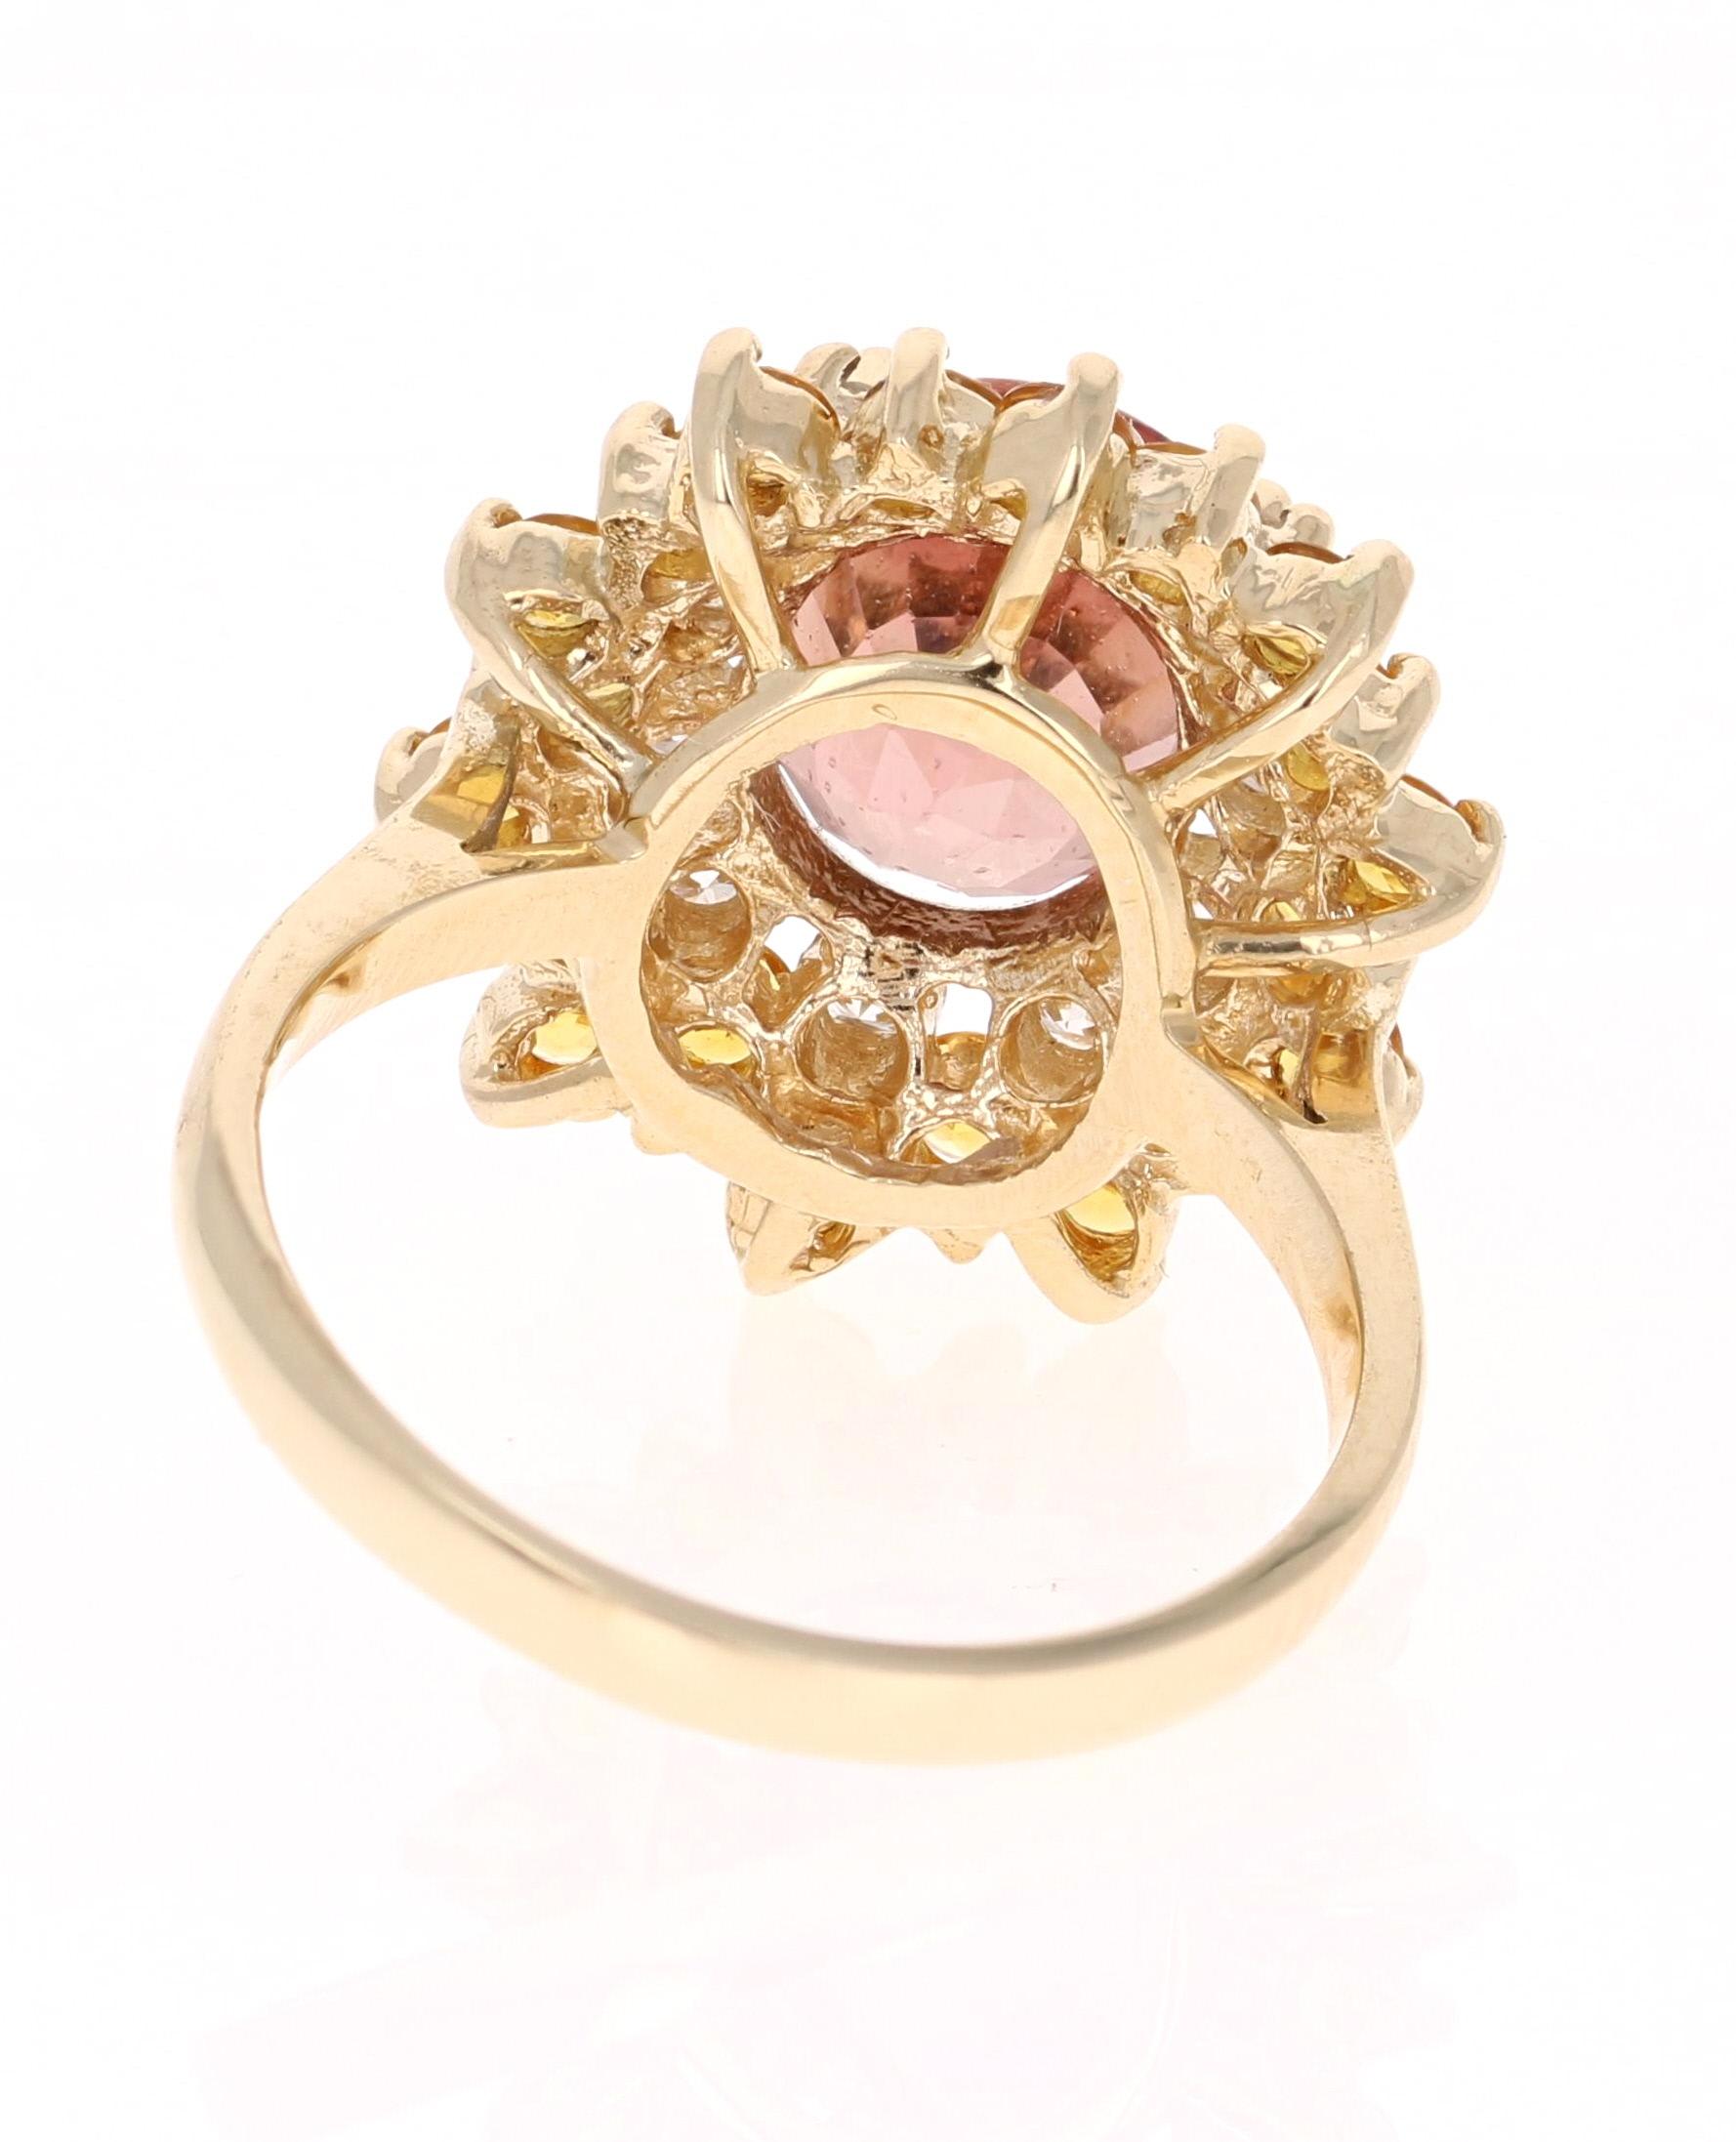 Contemporary 4.91 Carat Tourmaline Diamond 14 Karat Yellow Gold Ring For Sale